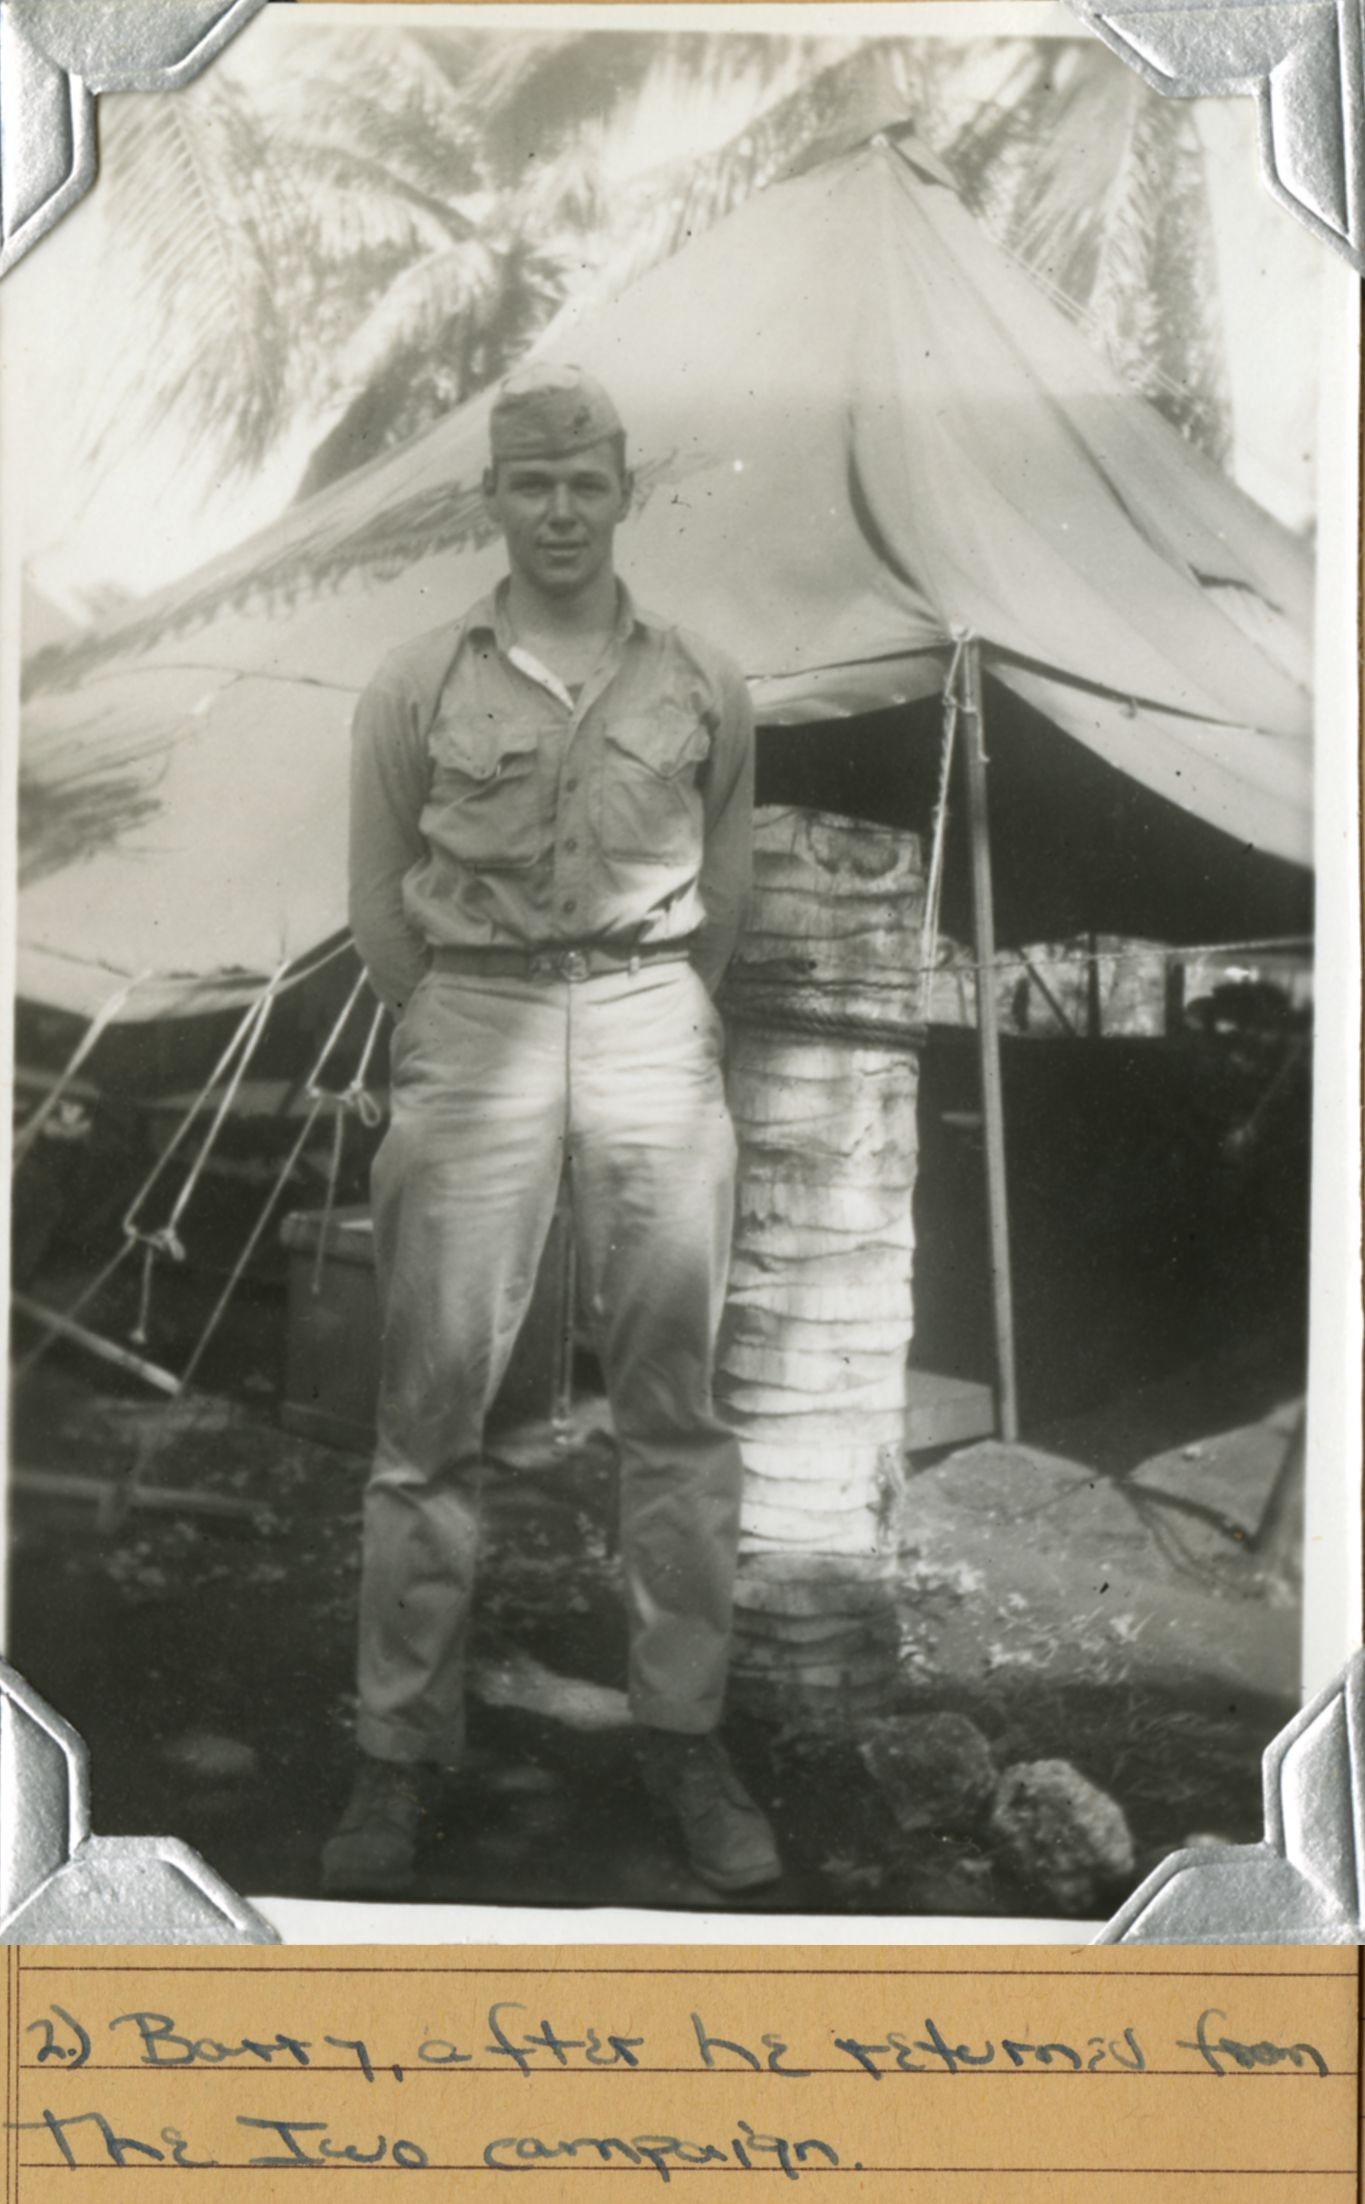 Photograph of Barry Marks in Uniform, 1943-1944. (The Gilder Lehrman Institute, GLC09620.350)